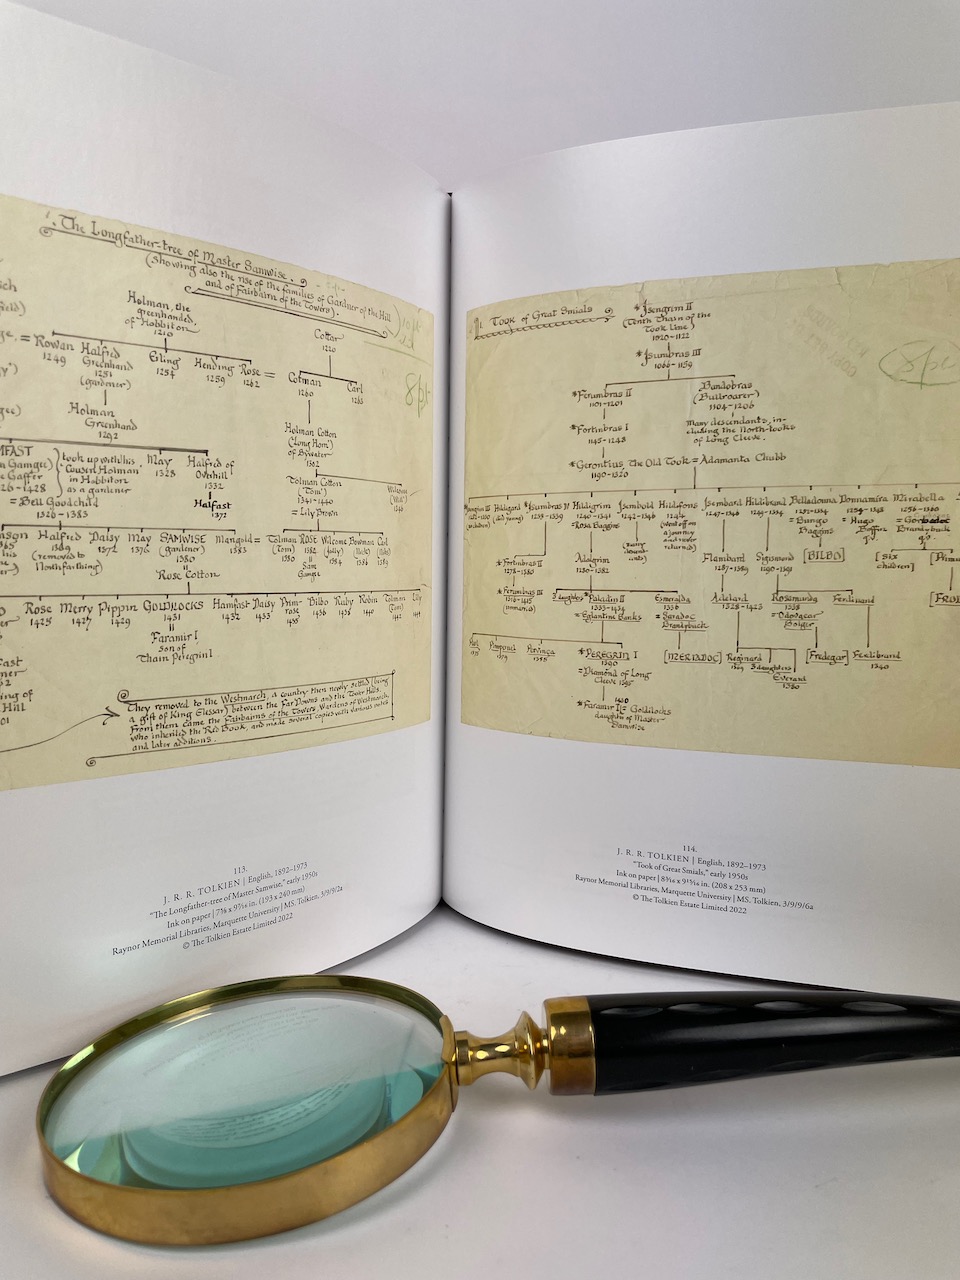 
J.R.R. Tolkien: The Art of the Manuscript - exhibition catalogue 7